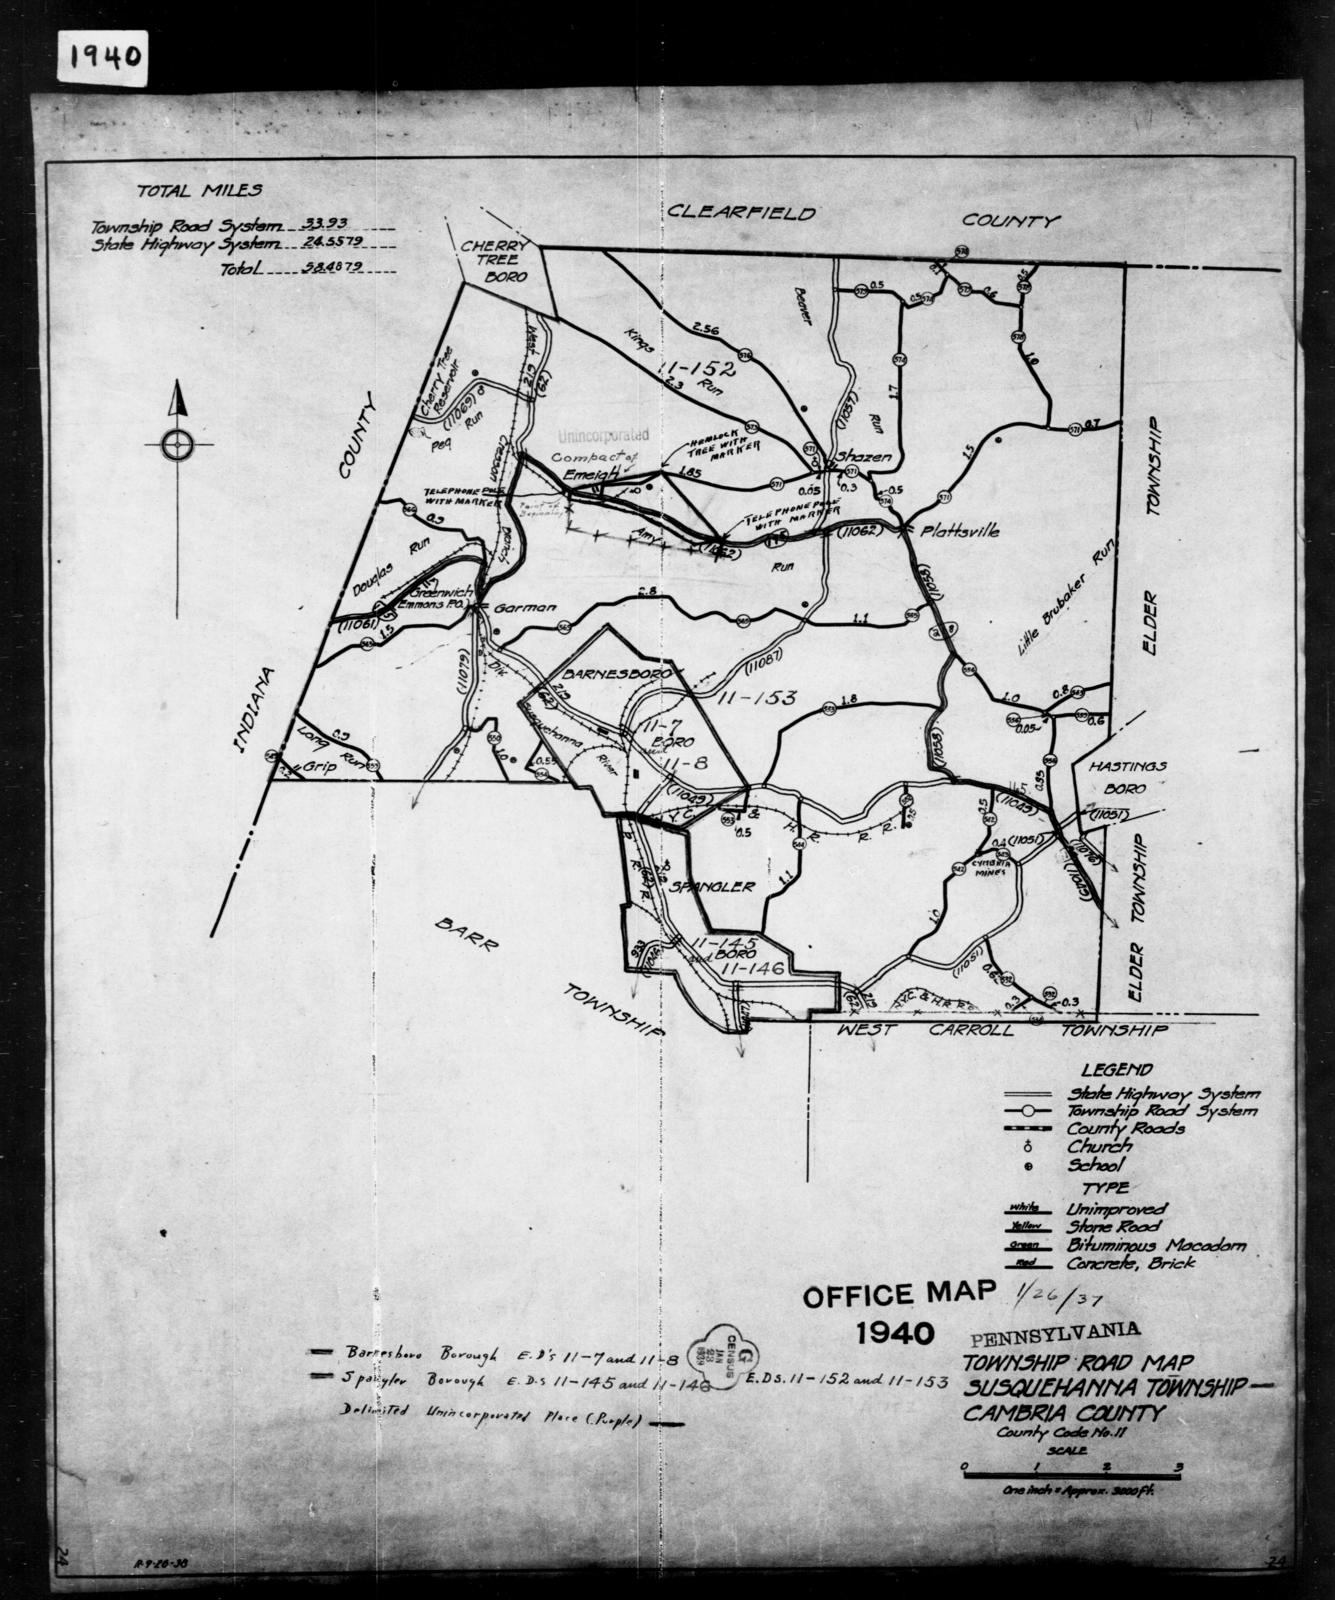 1940-census-enumeration-district-maps-pennsylvania-cambria-county